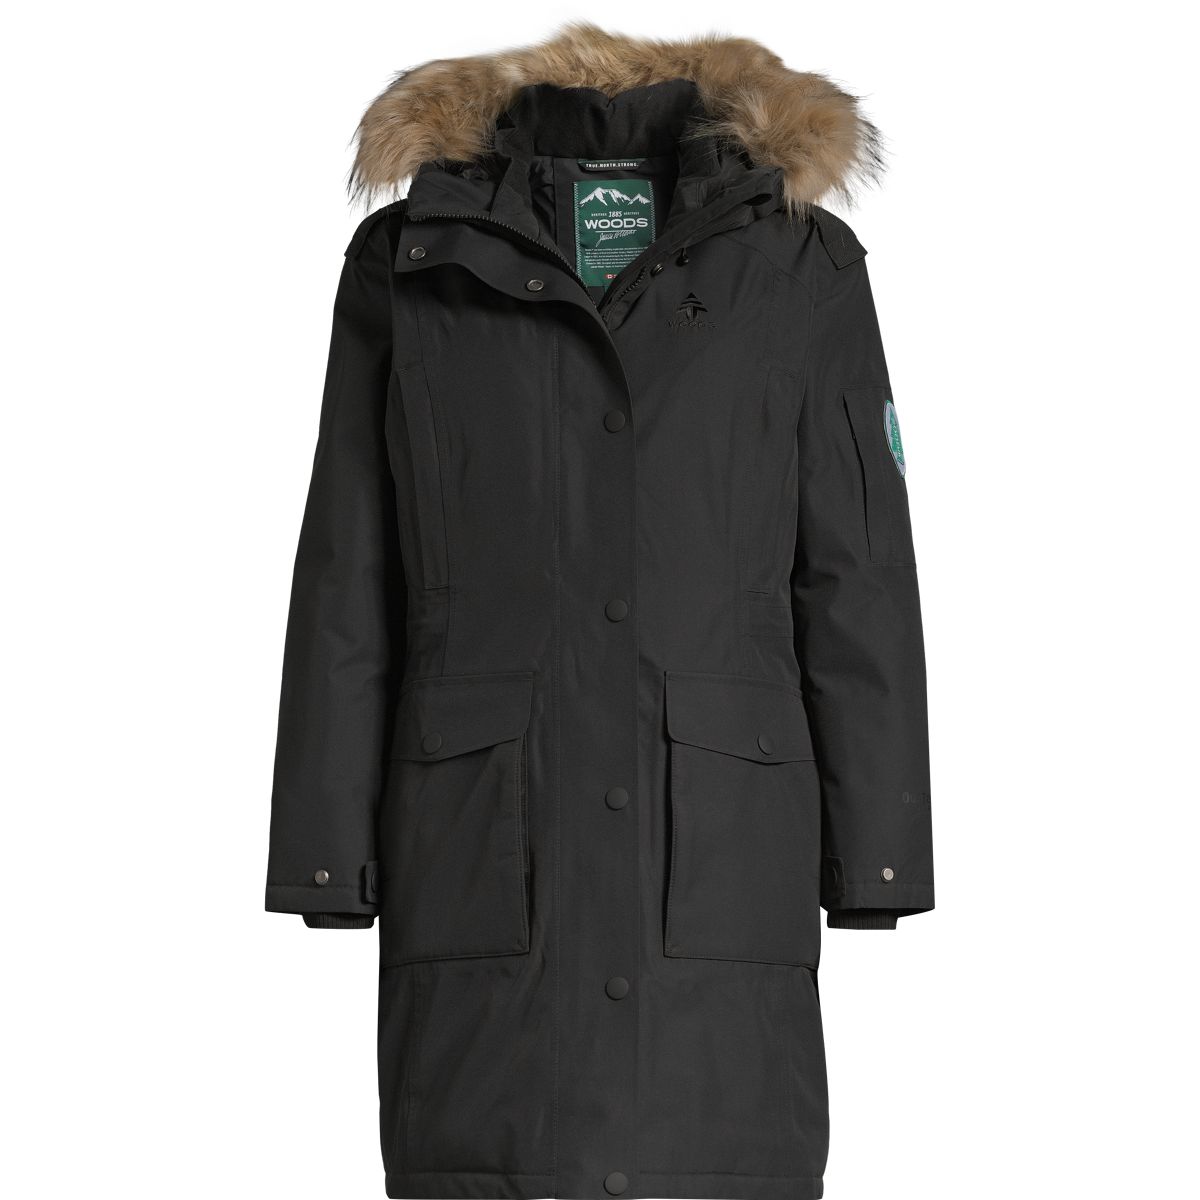 Woods Women's Lipsett Baffled Winter Jacket, Long, Insulated Down, Hooded,  Water Resistant